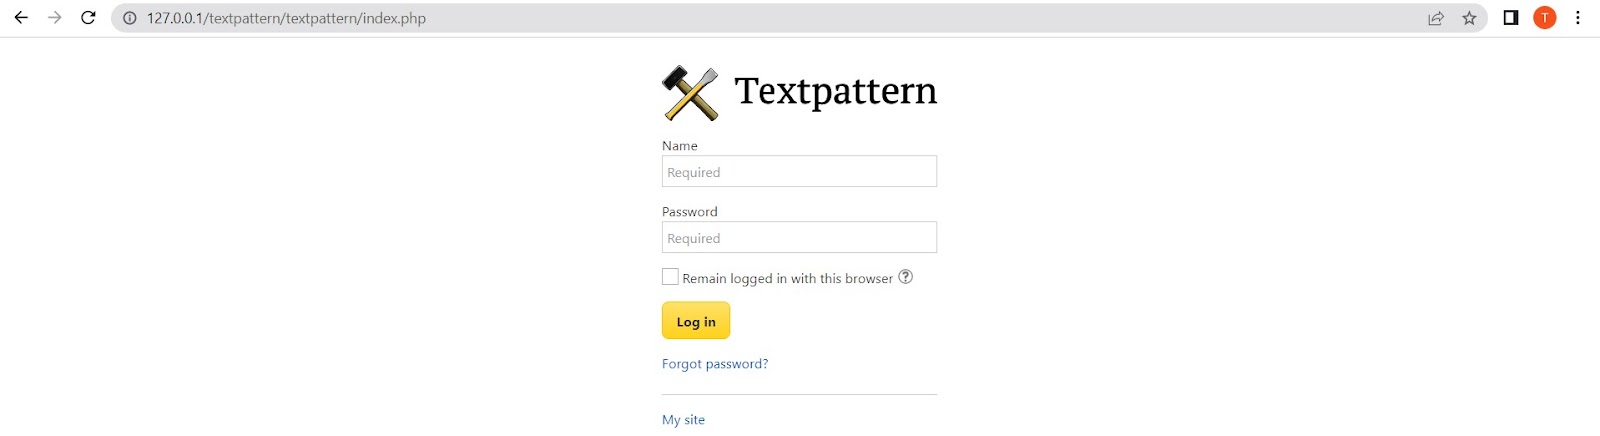 contoh halaman login pengguna situs web textpattern